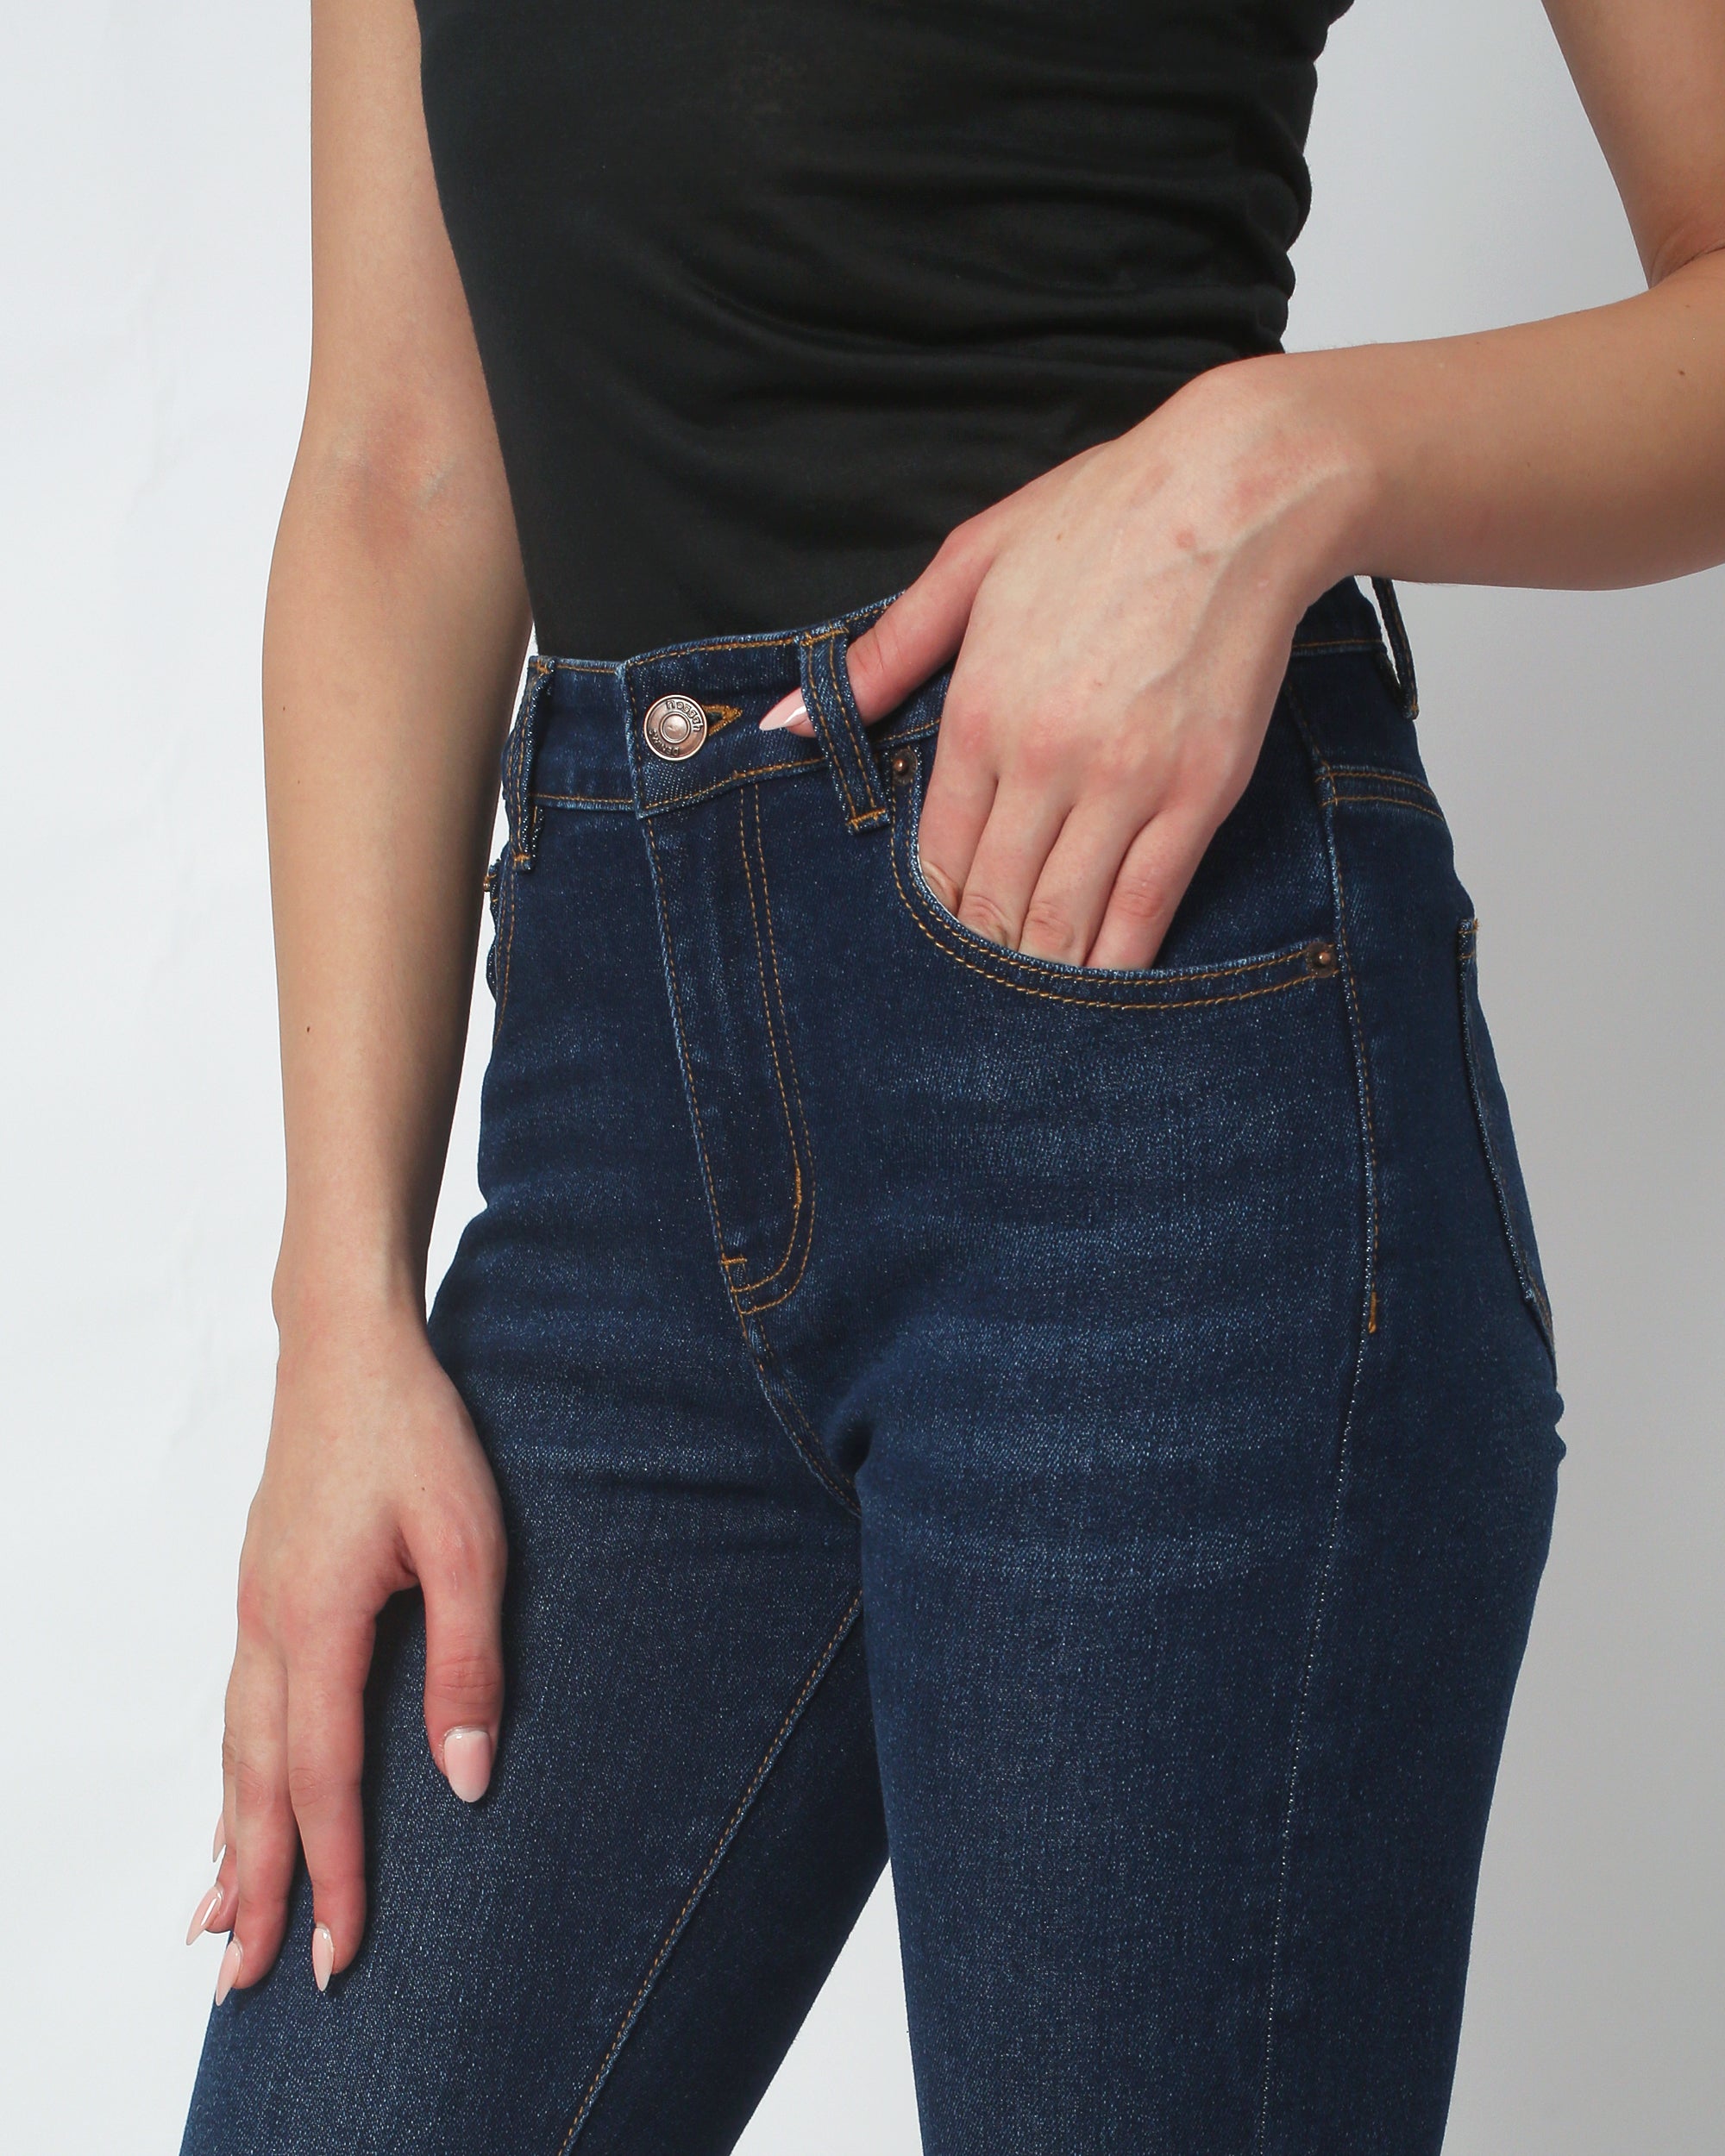 Jean Stretch Pants for Women with Pockets Jeans Casual Mid Dark Women's Blue  Pants Trousers Pockets Waist Denim Classic Women's Jeans Mega Leans -  Walmart.com